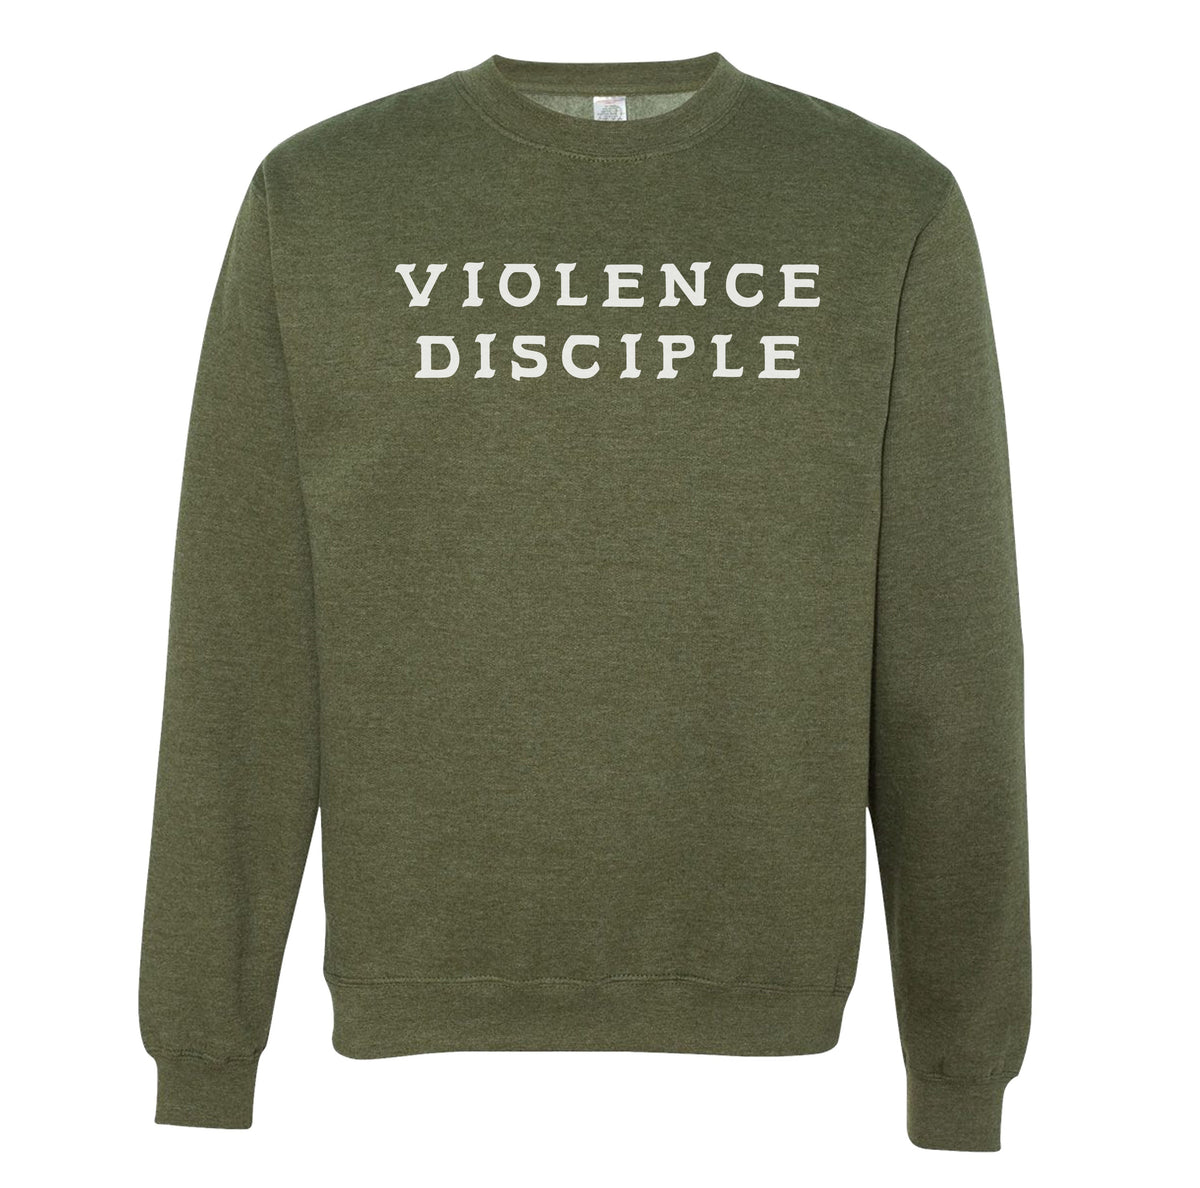 Violence Disciple Sweatshirt